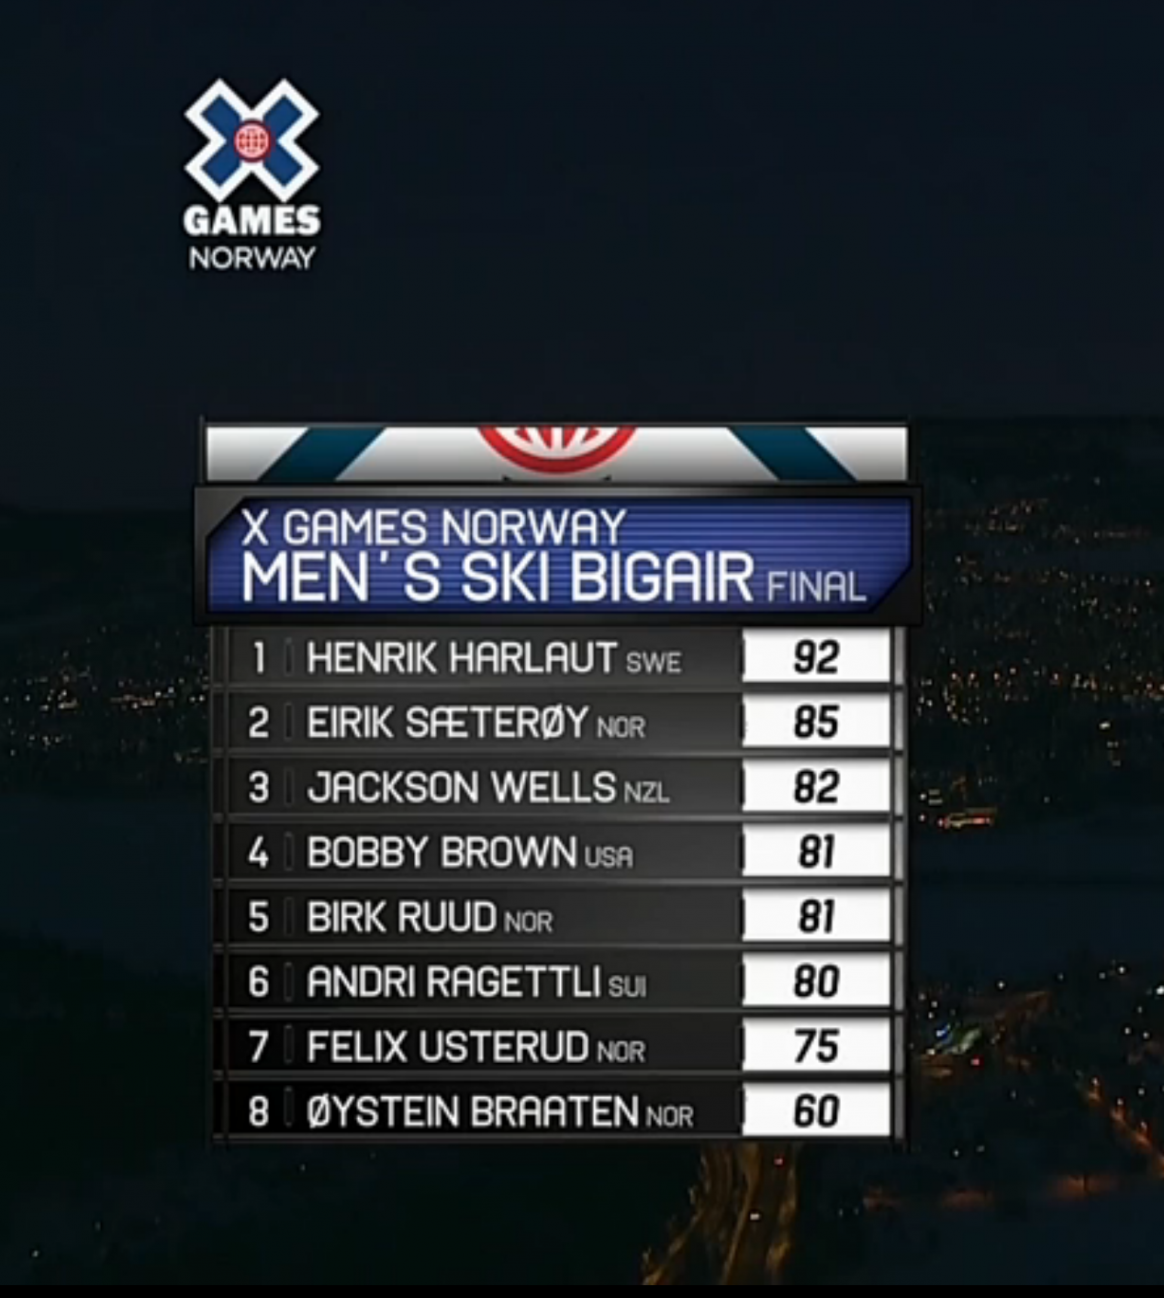 X Games Norway Men's Ski Big Air results